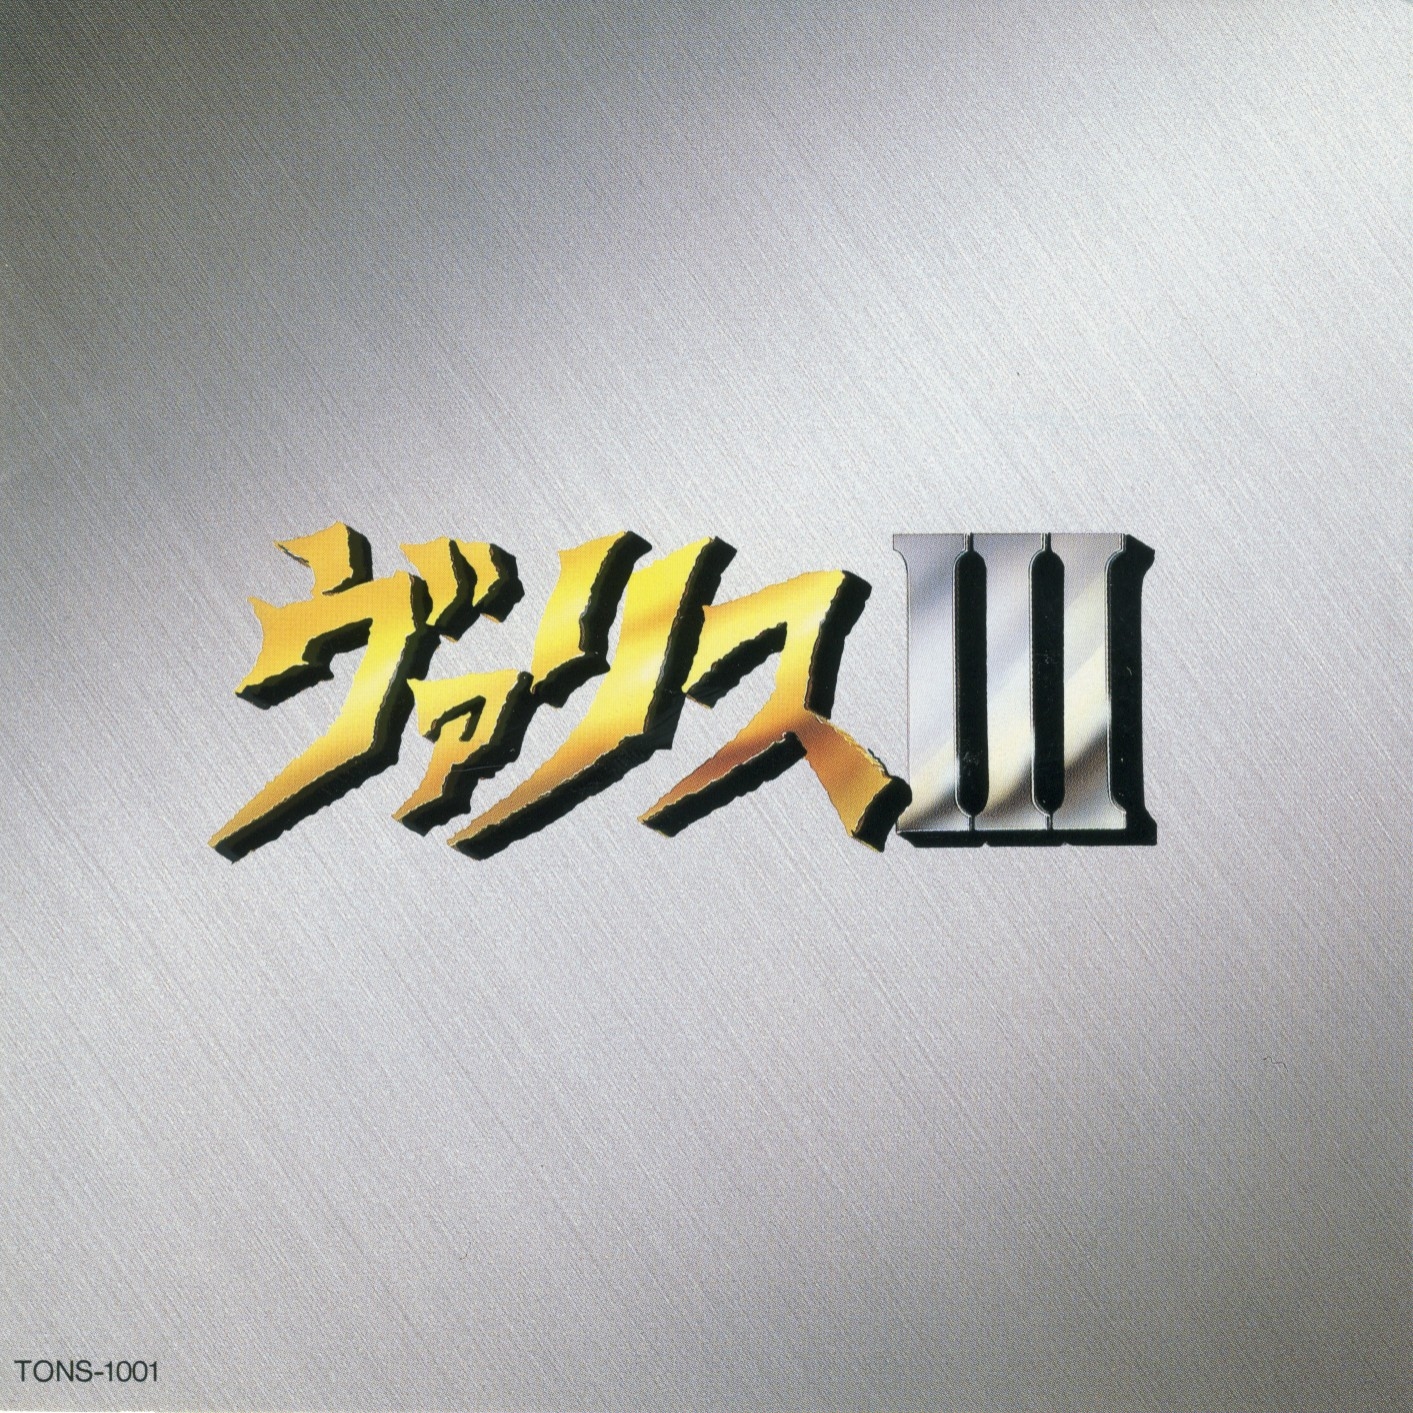 Valis III (1991) MP3 - Download Valis III (1991) Soundtracks for FREE!